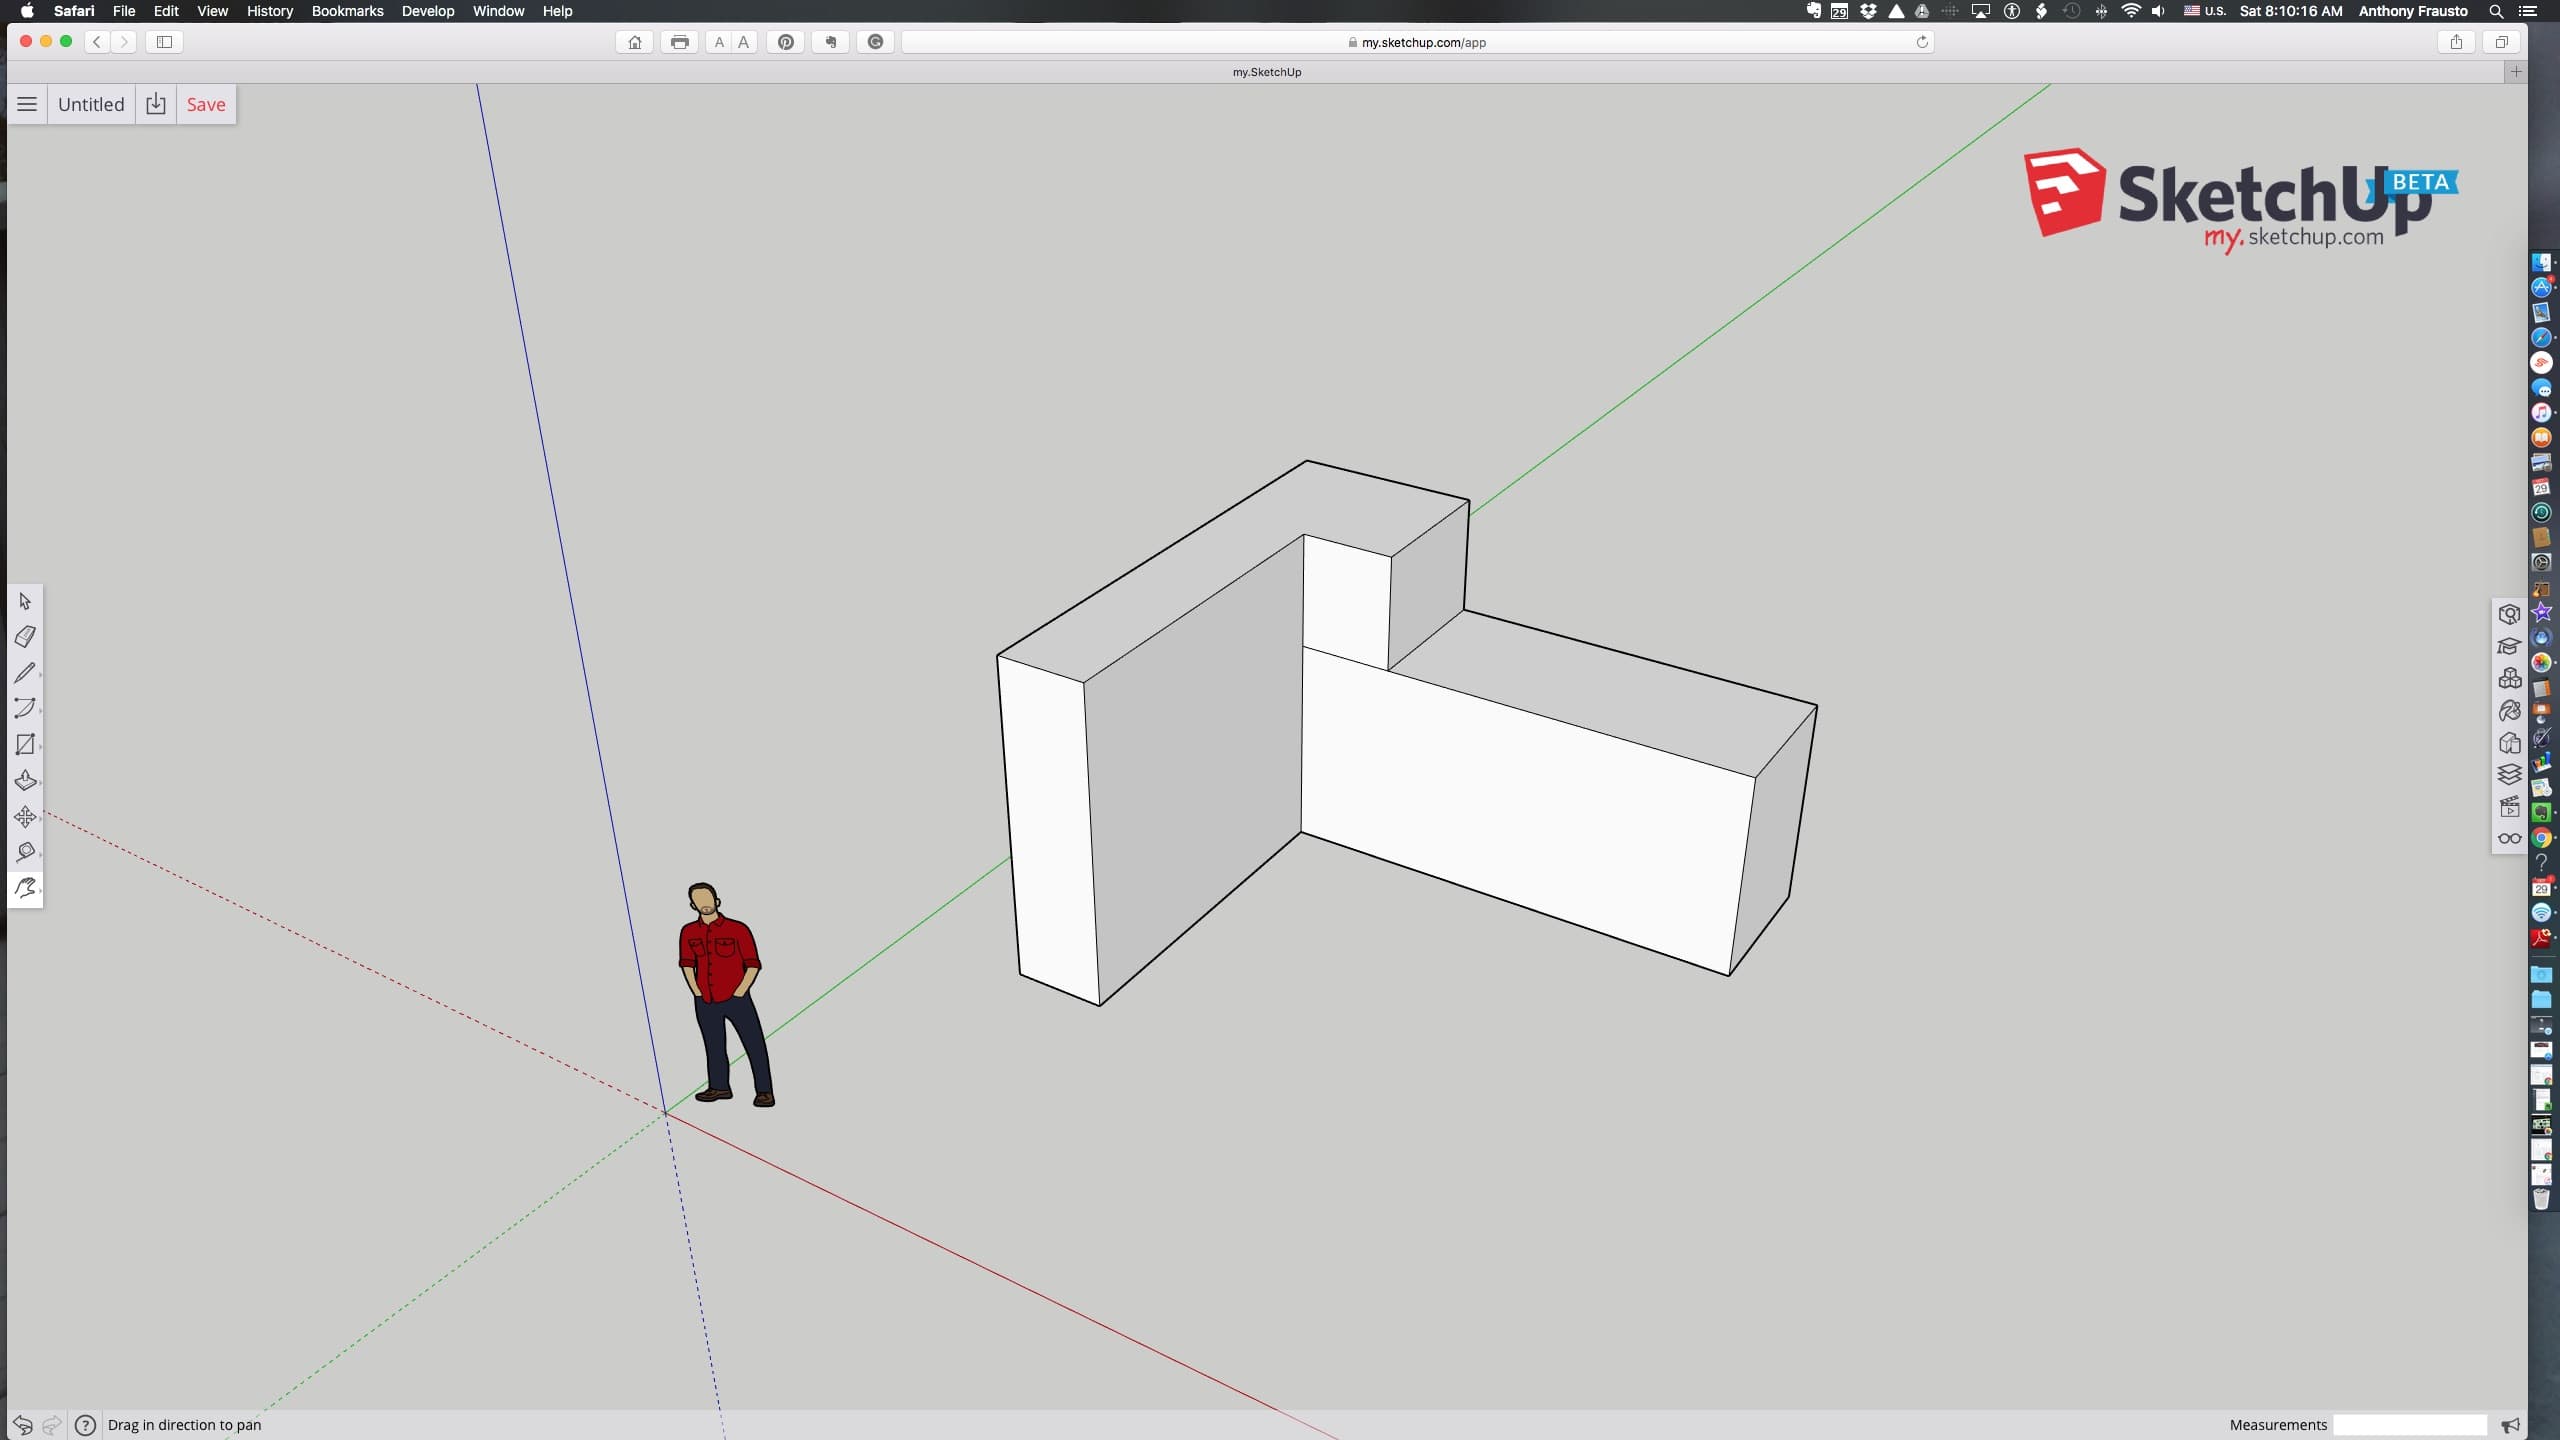 Sketchup - Software gratuito de modelado 3D